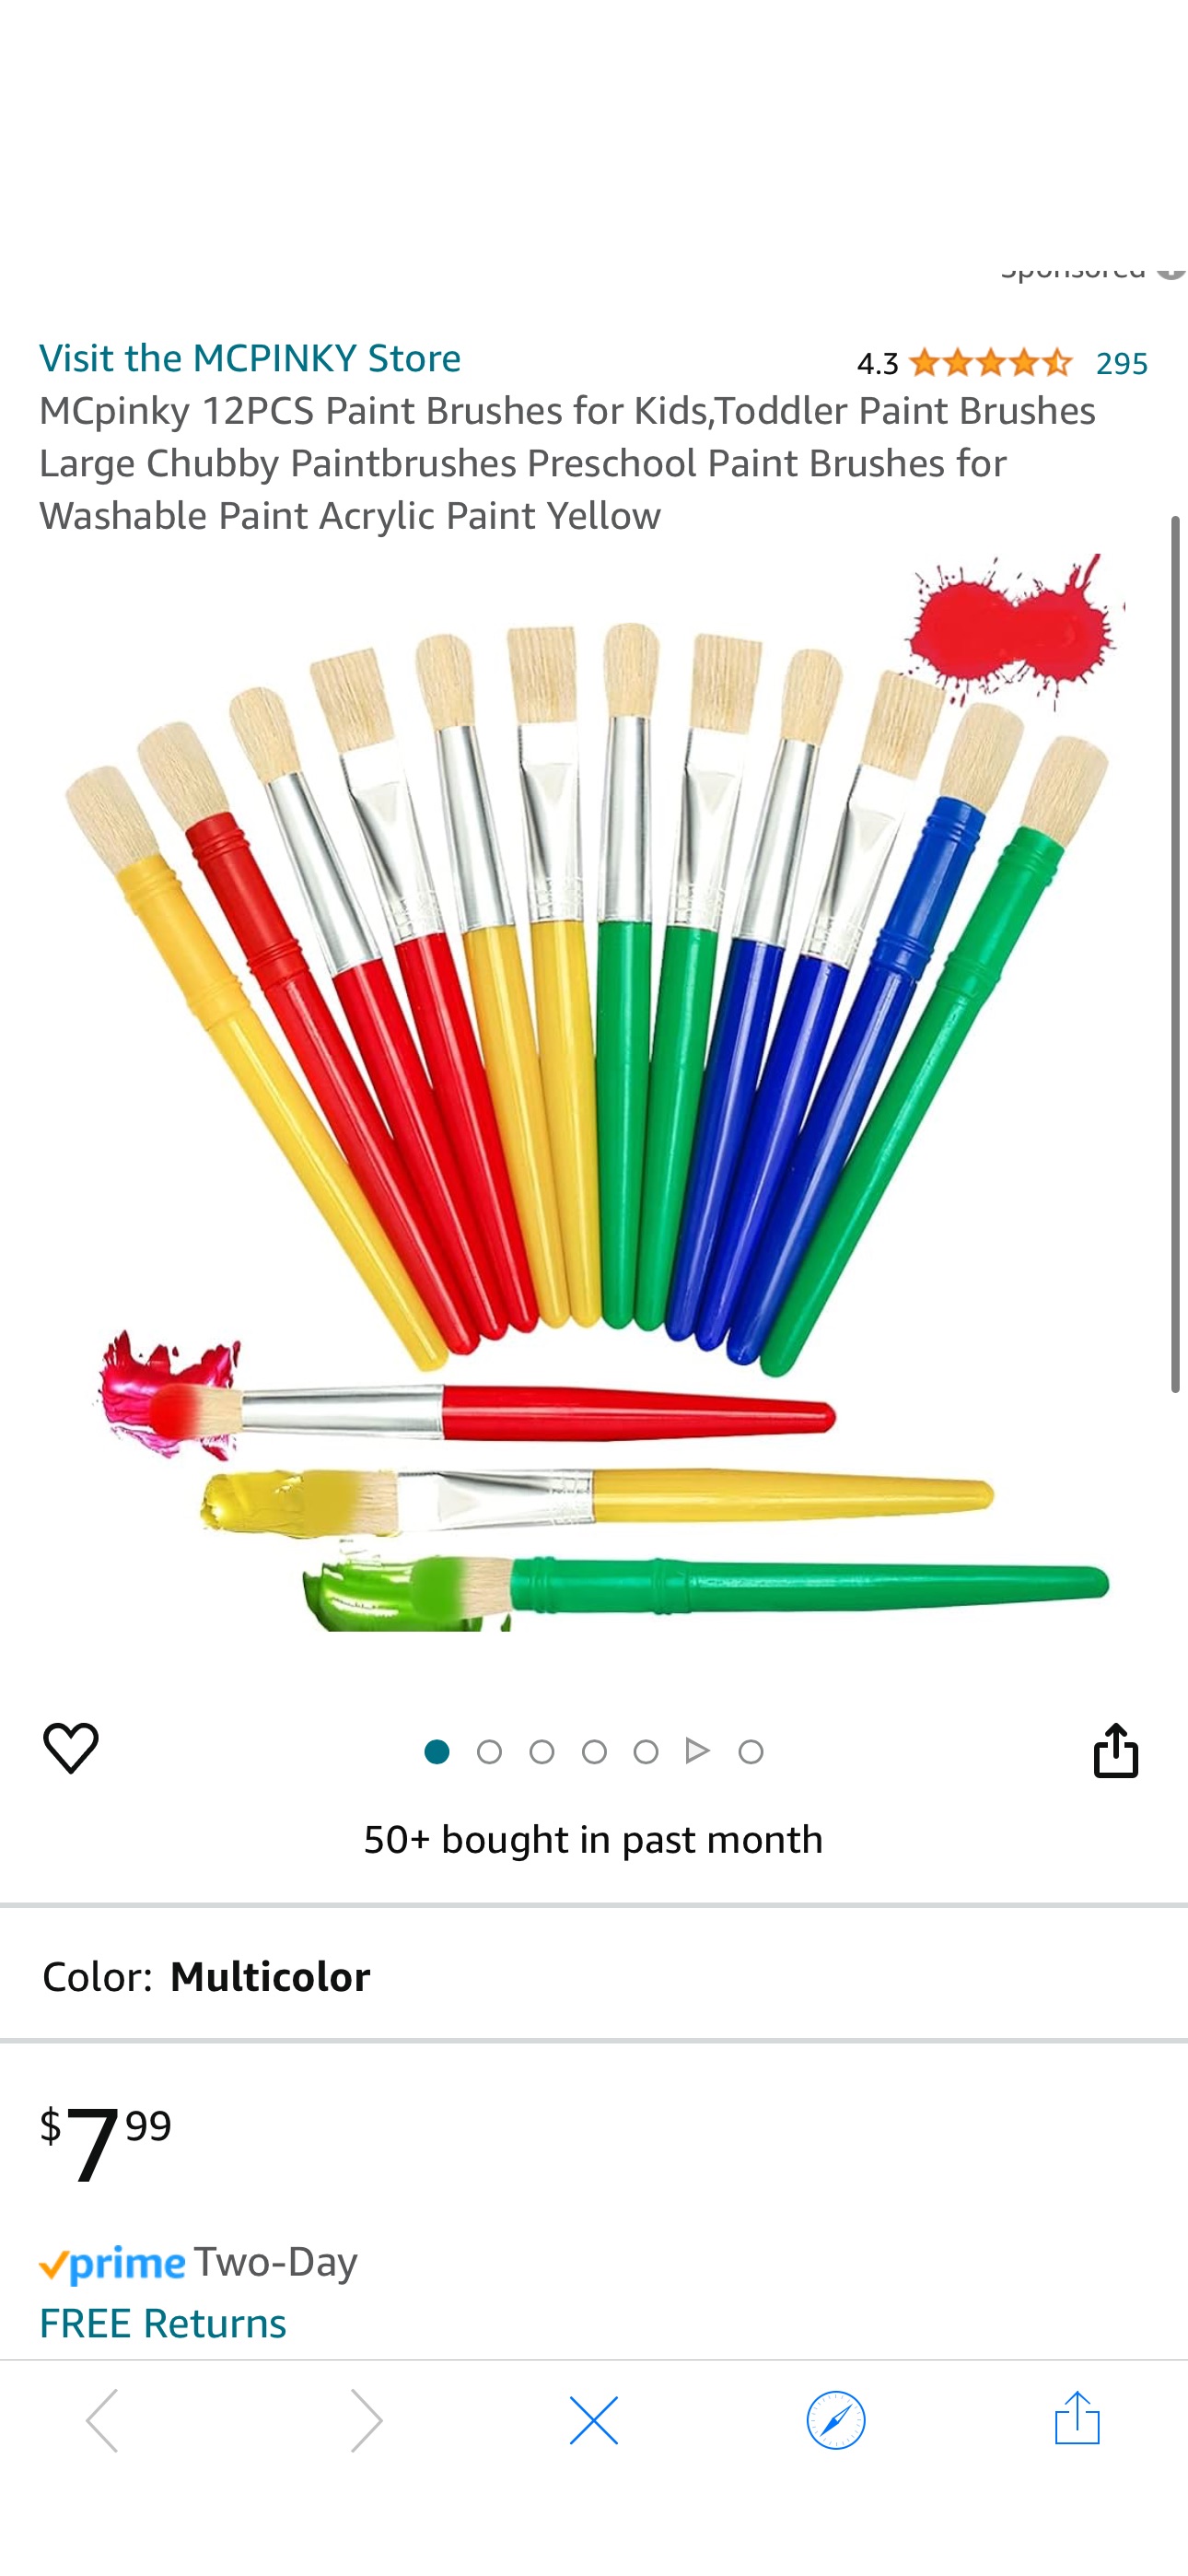 Amazon.com: MCpinky 12PCS Paint Brushes for Kids,Toddler Paint Brushes Large Chubby Paintbrushes Preschool Paint Brushes $3.99 12PCS Paint Brushes for Kids
Use Code 545BI9WZ